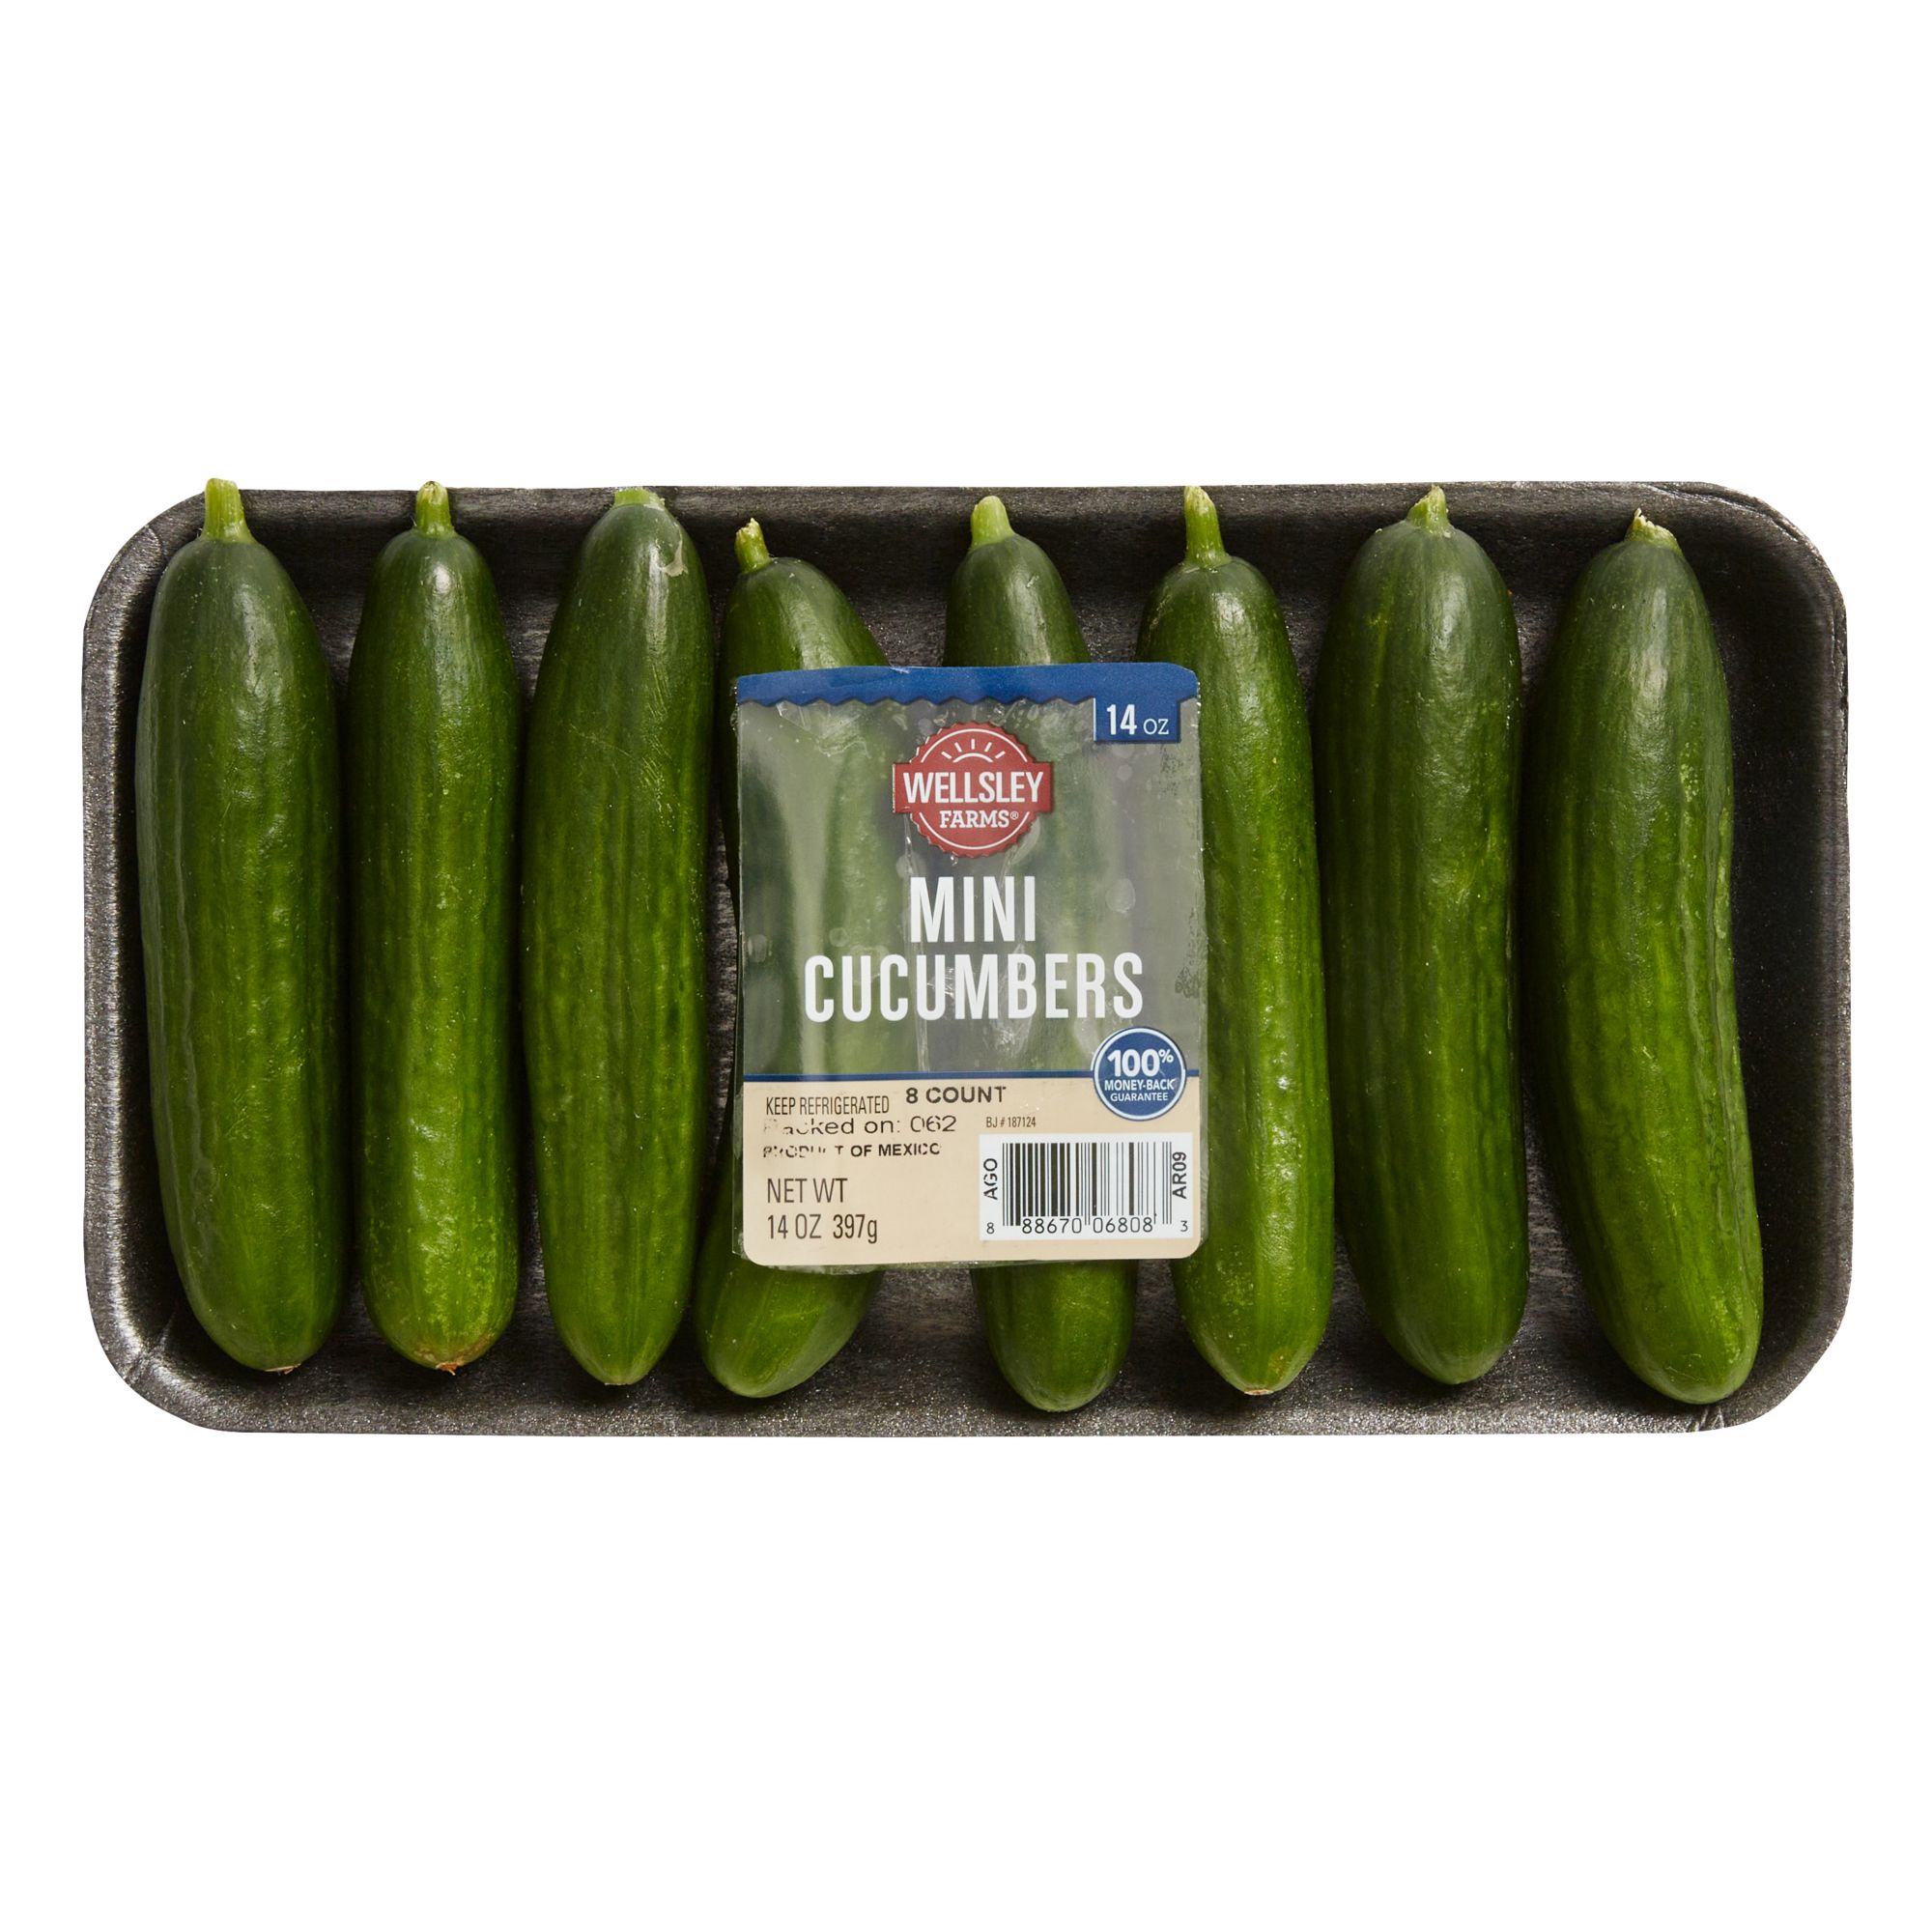 Wellsley Farms Mini Cucumbers, 8 ct.